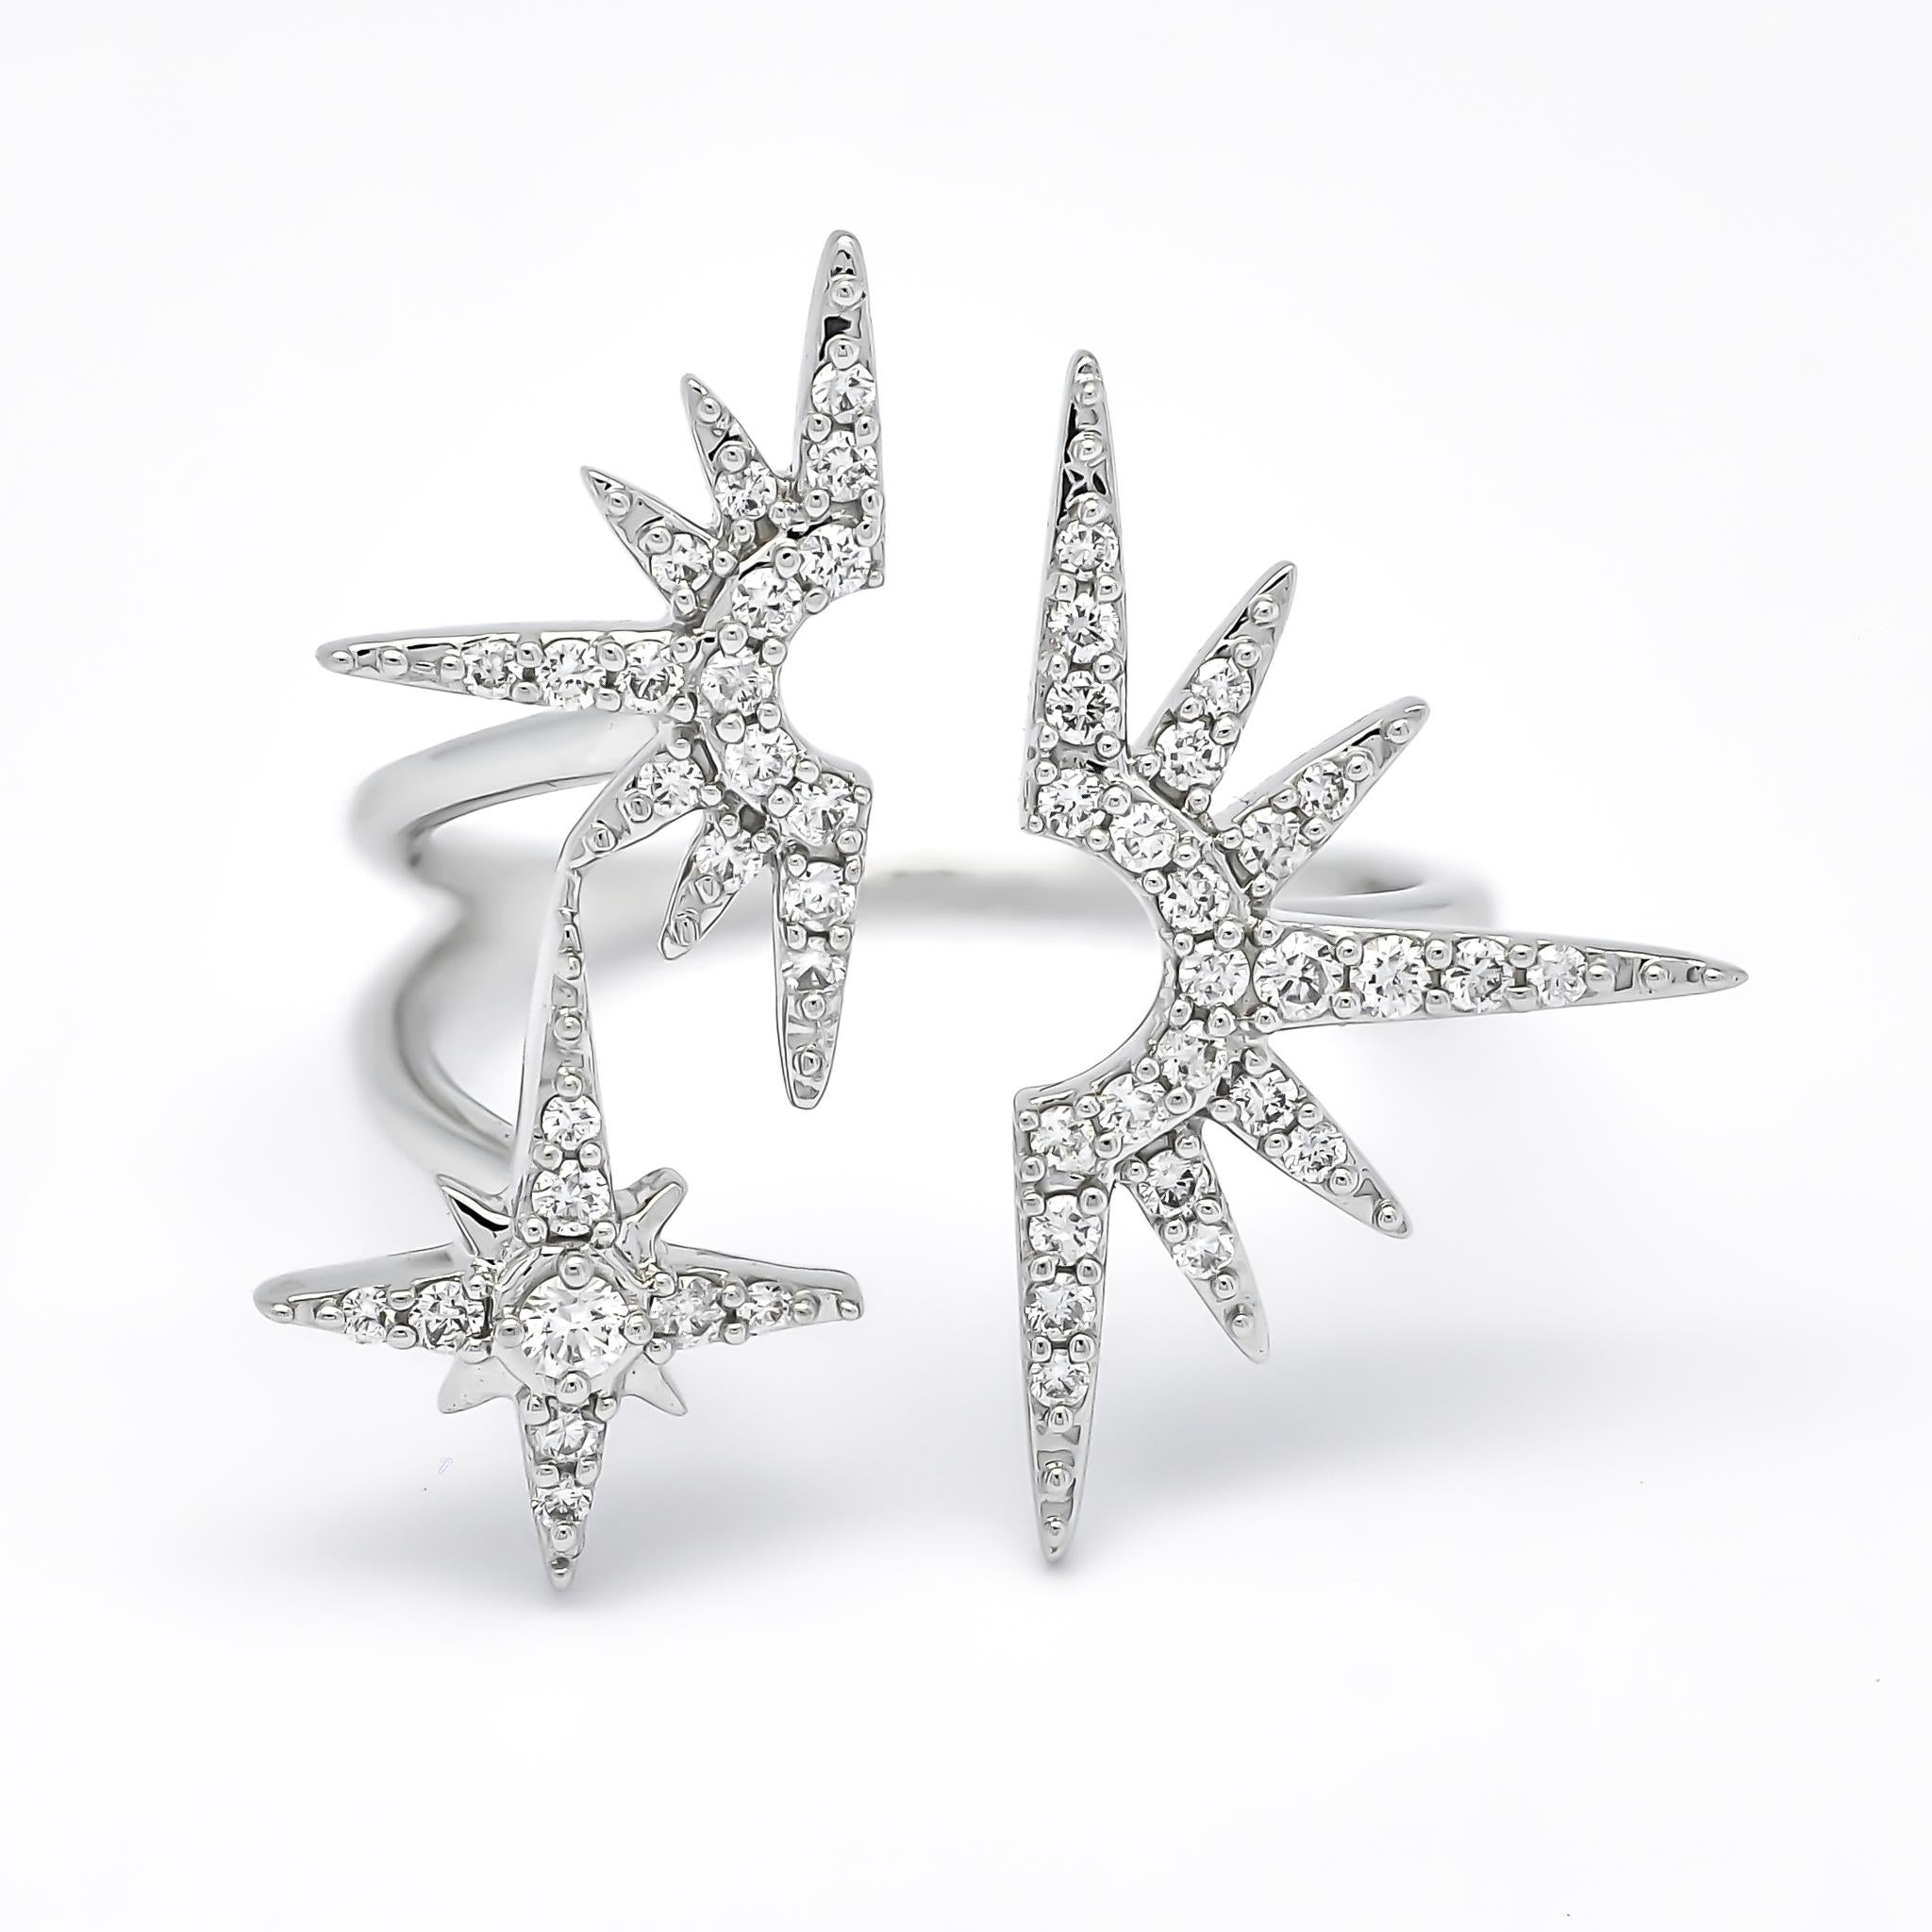 For Sale:  18KT White Gold Diamonds Star Burst Statement Ring R085743, Dainty Luxury Ring 4